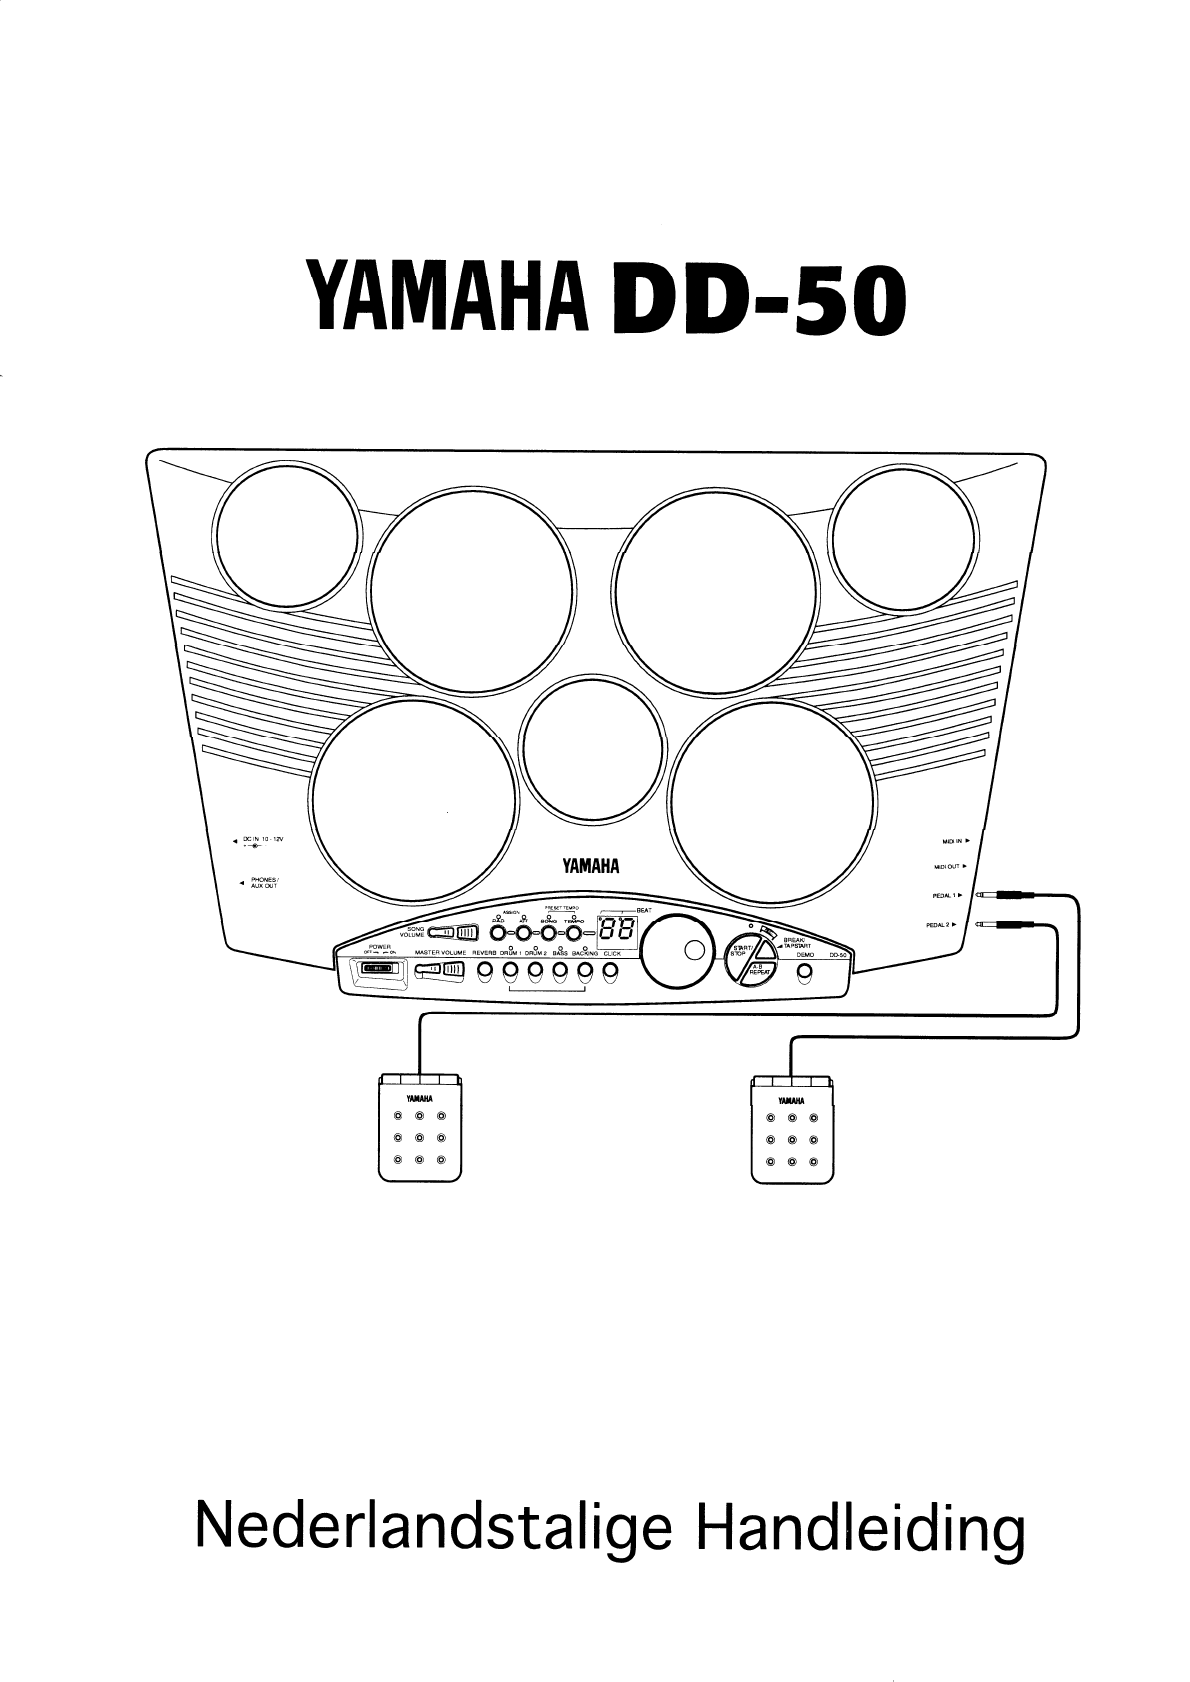 Handleiding Yamaha DD-50 (pagina 1 van 32) (Nederlands)